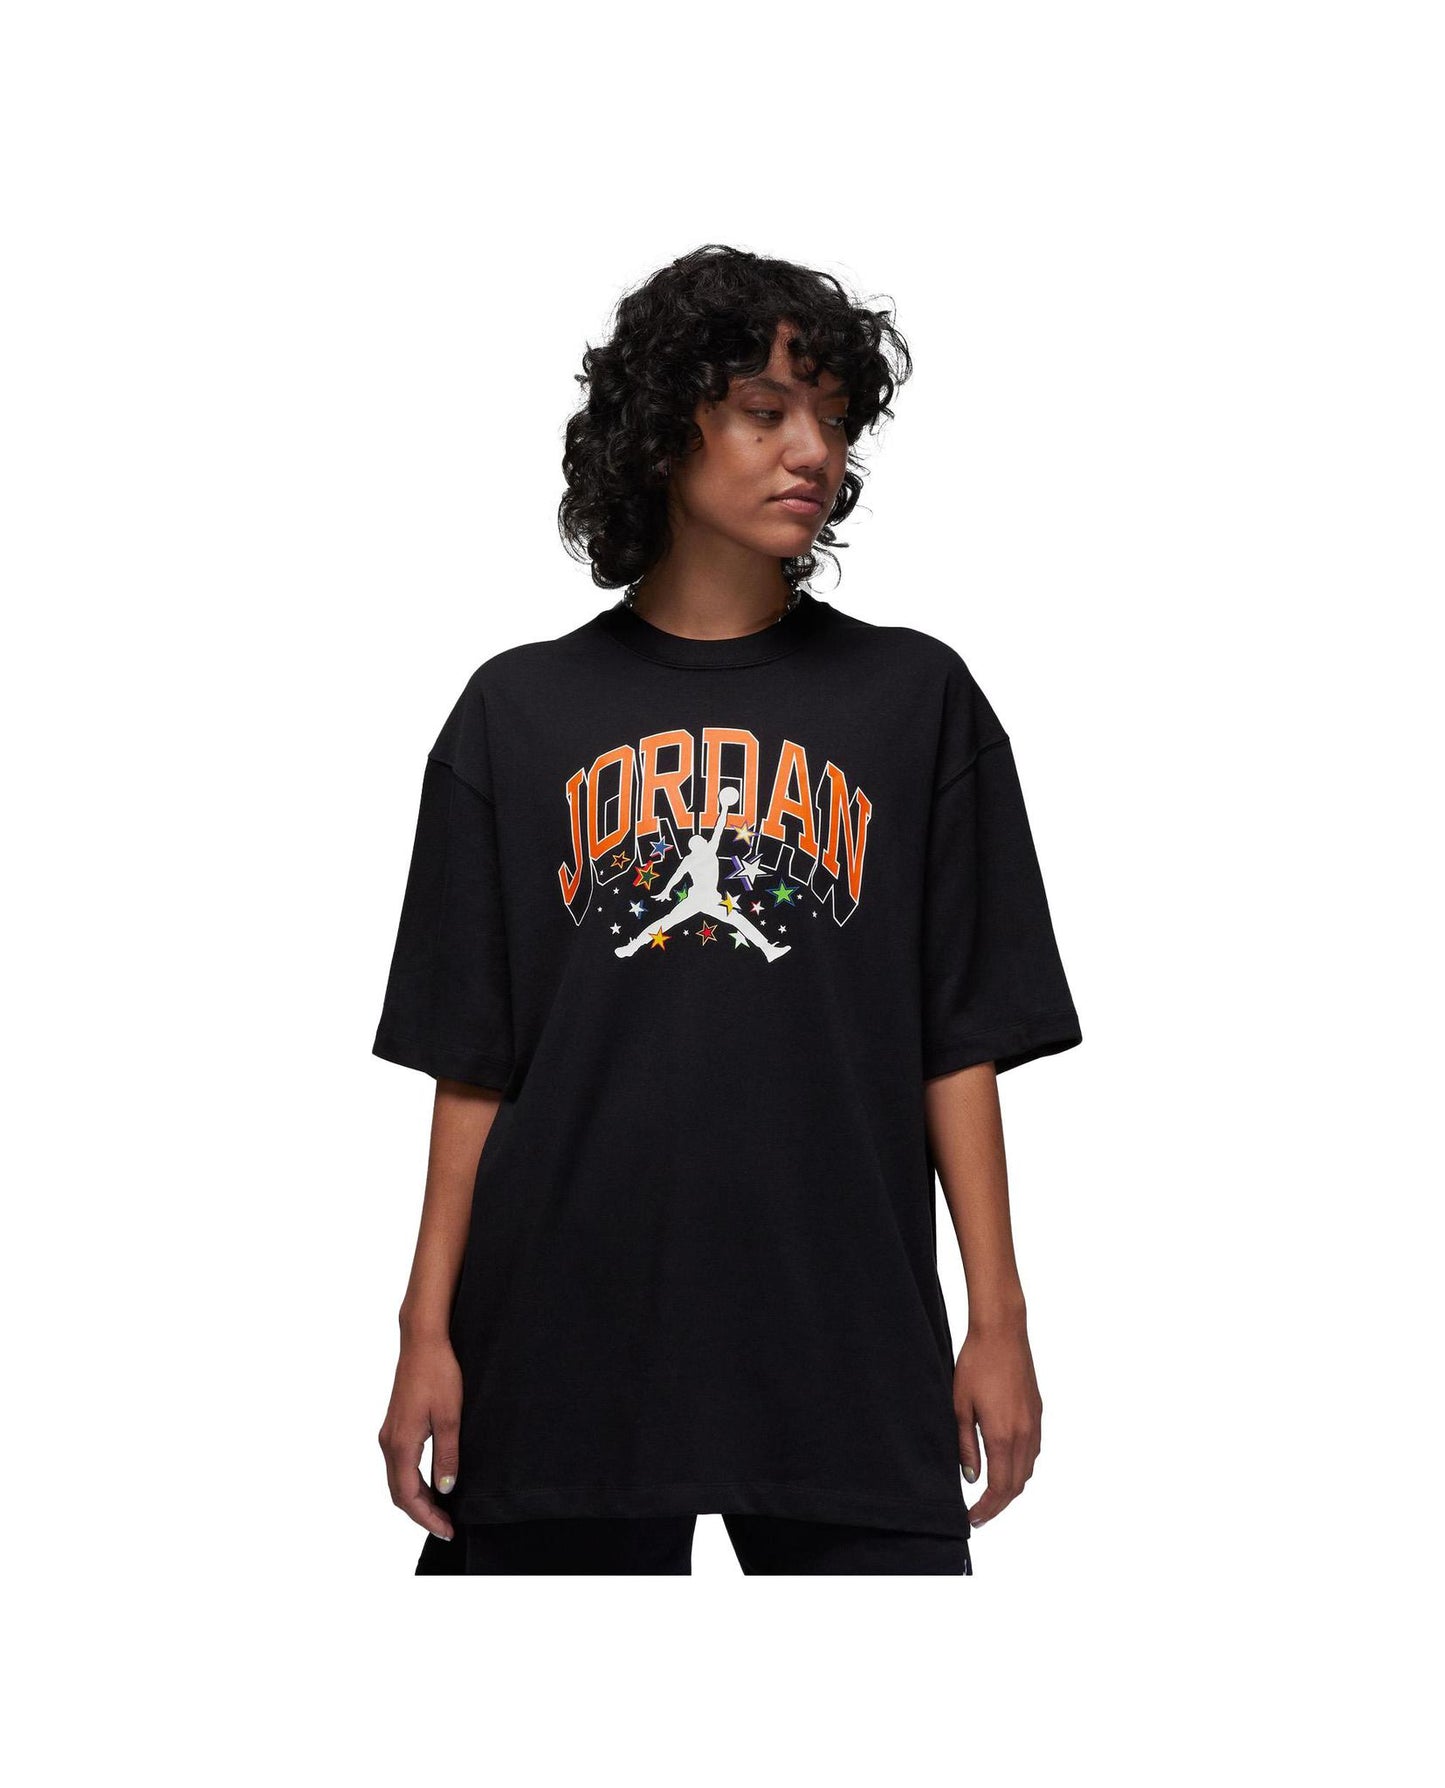 
                    
                      Jordan Women's Tee Shirt
                    
                  